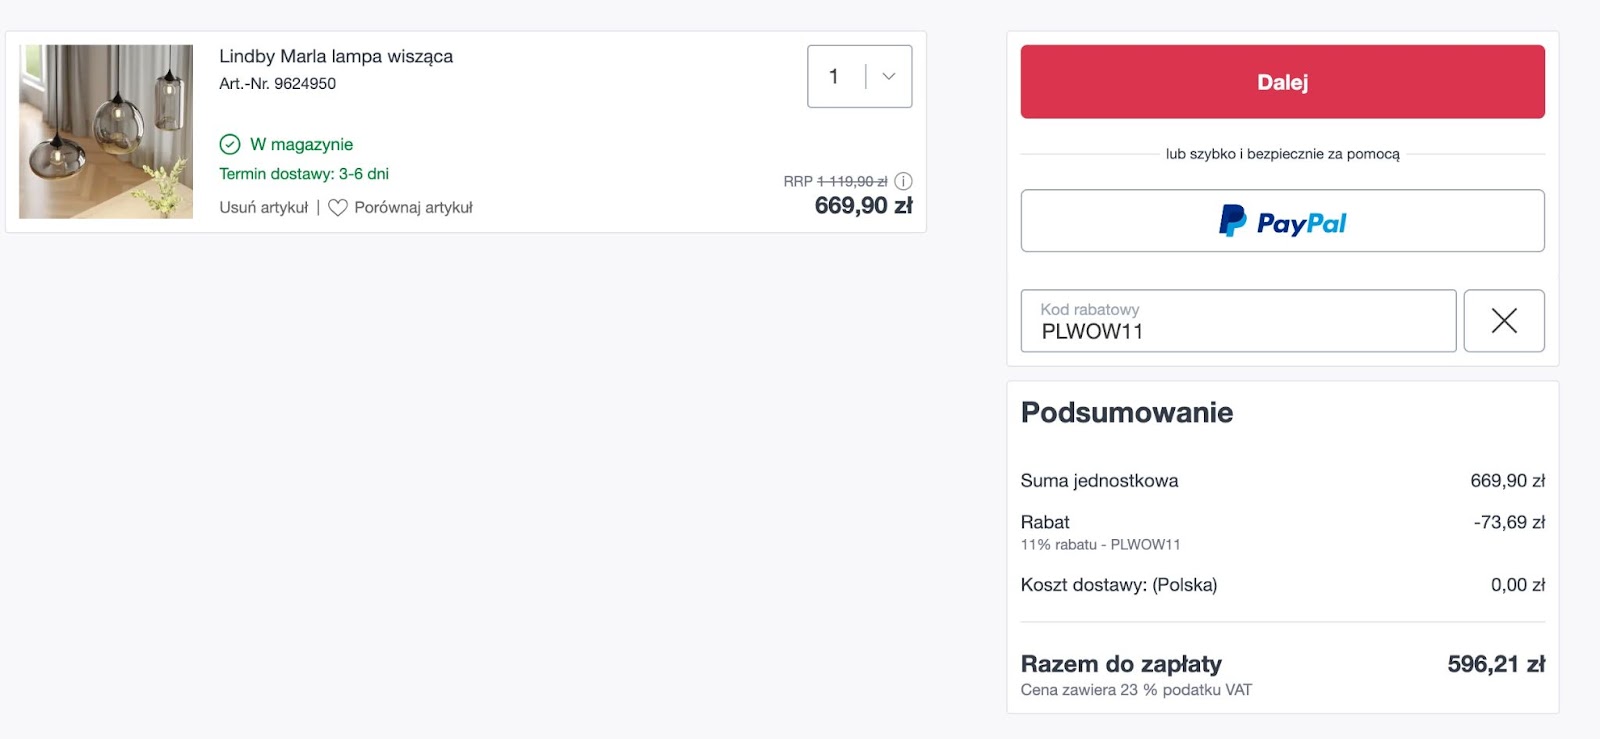 Lampy.pl kod rabatowy -11%